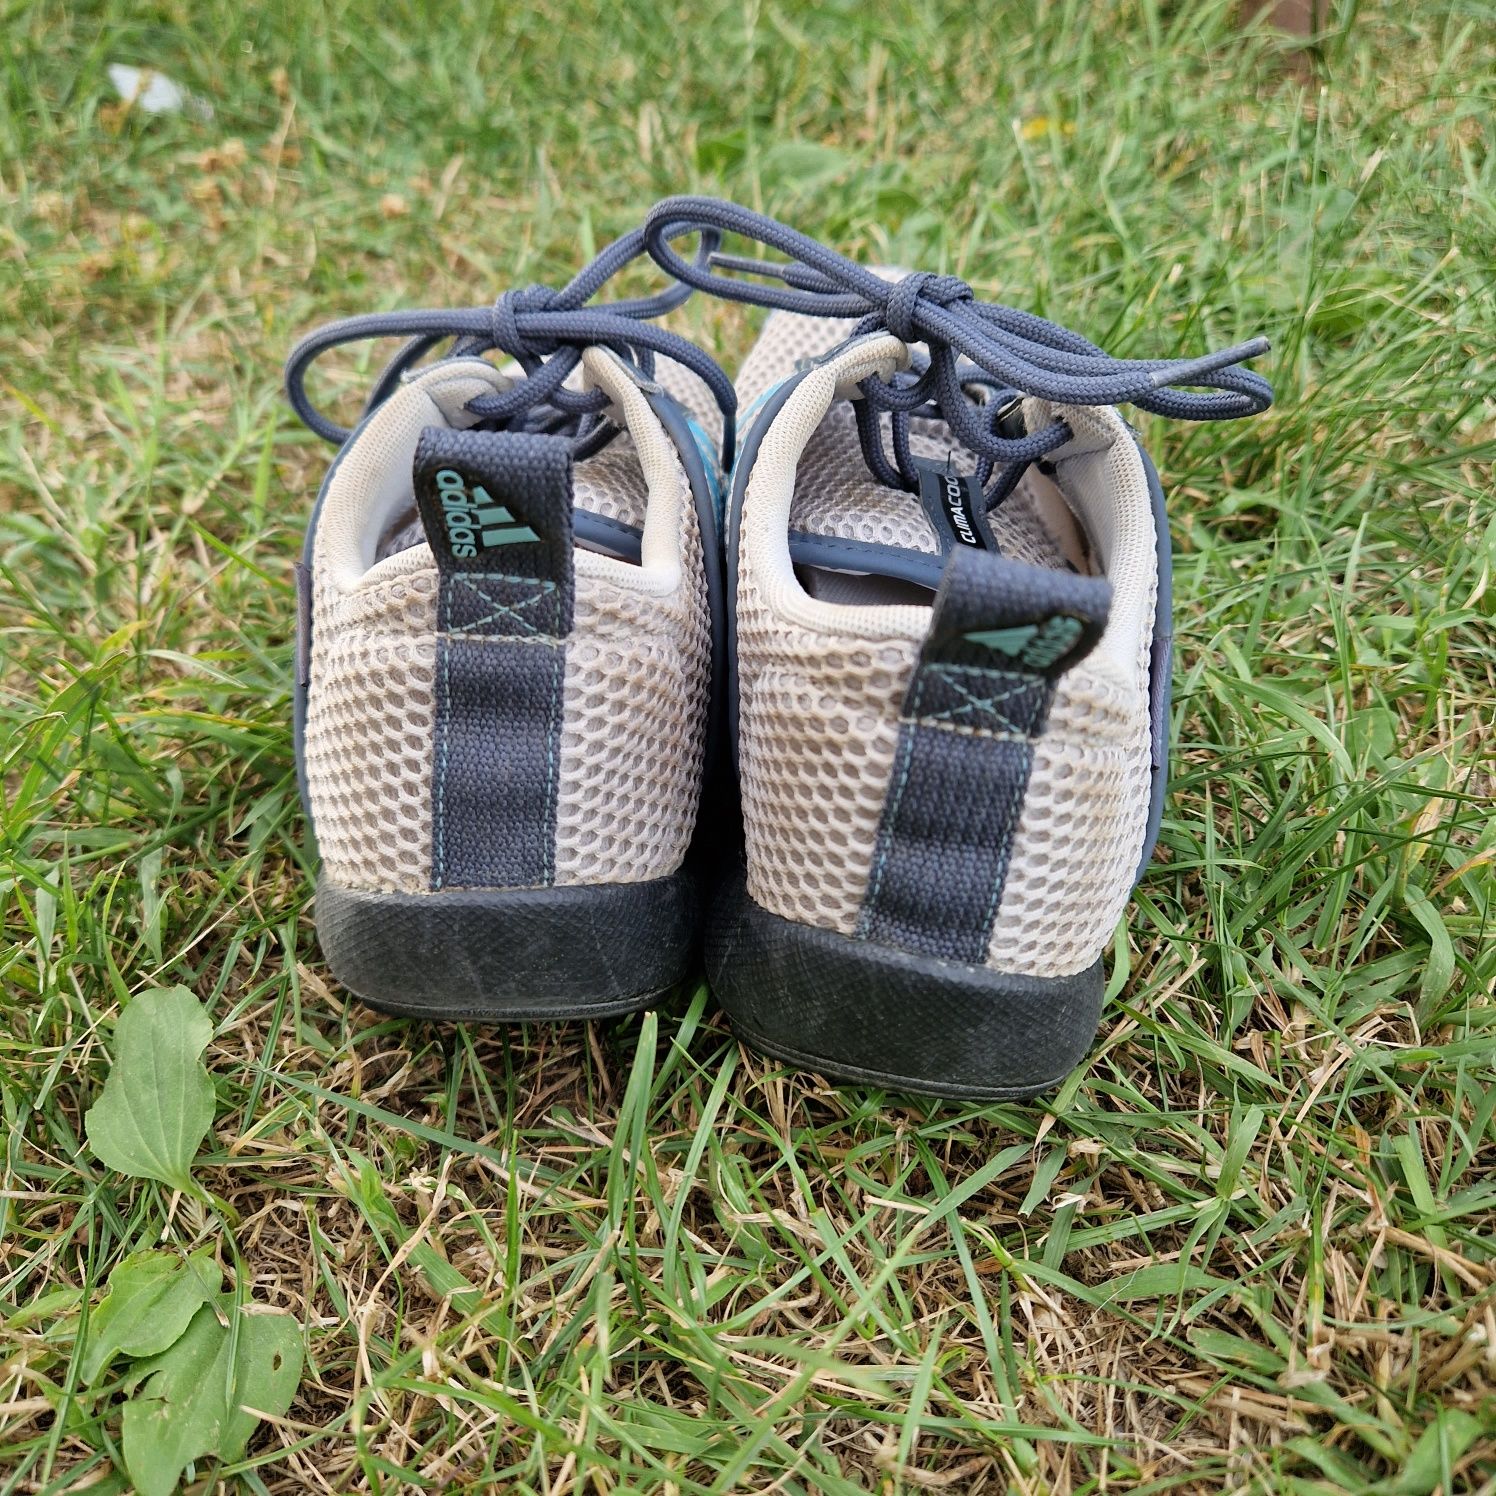 Pantofi sport, Adidasi drumetie trekking, Adidas Daroga Trail - 39